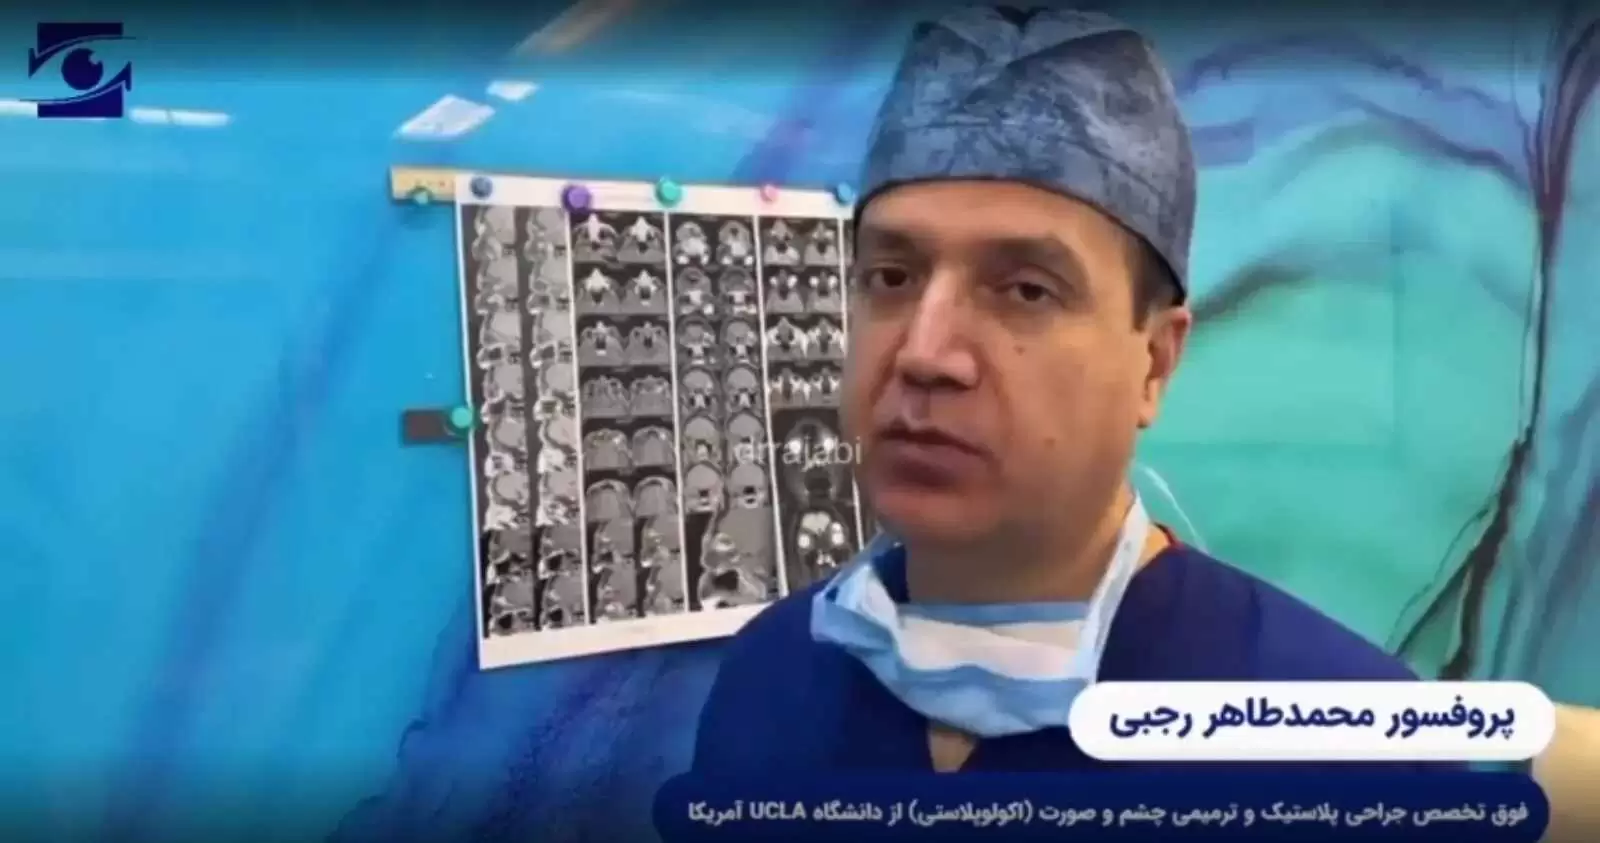 ویدئو: جراحی تومور شوانوم سوپرااربیتال